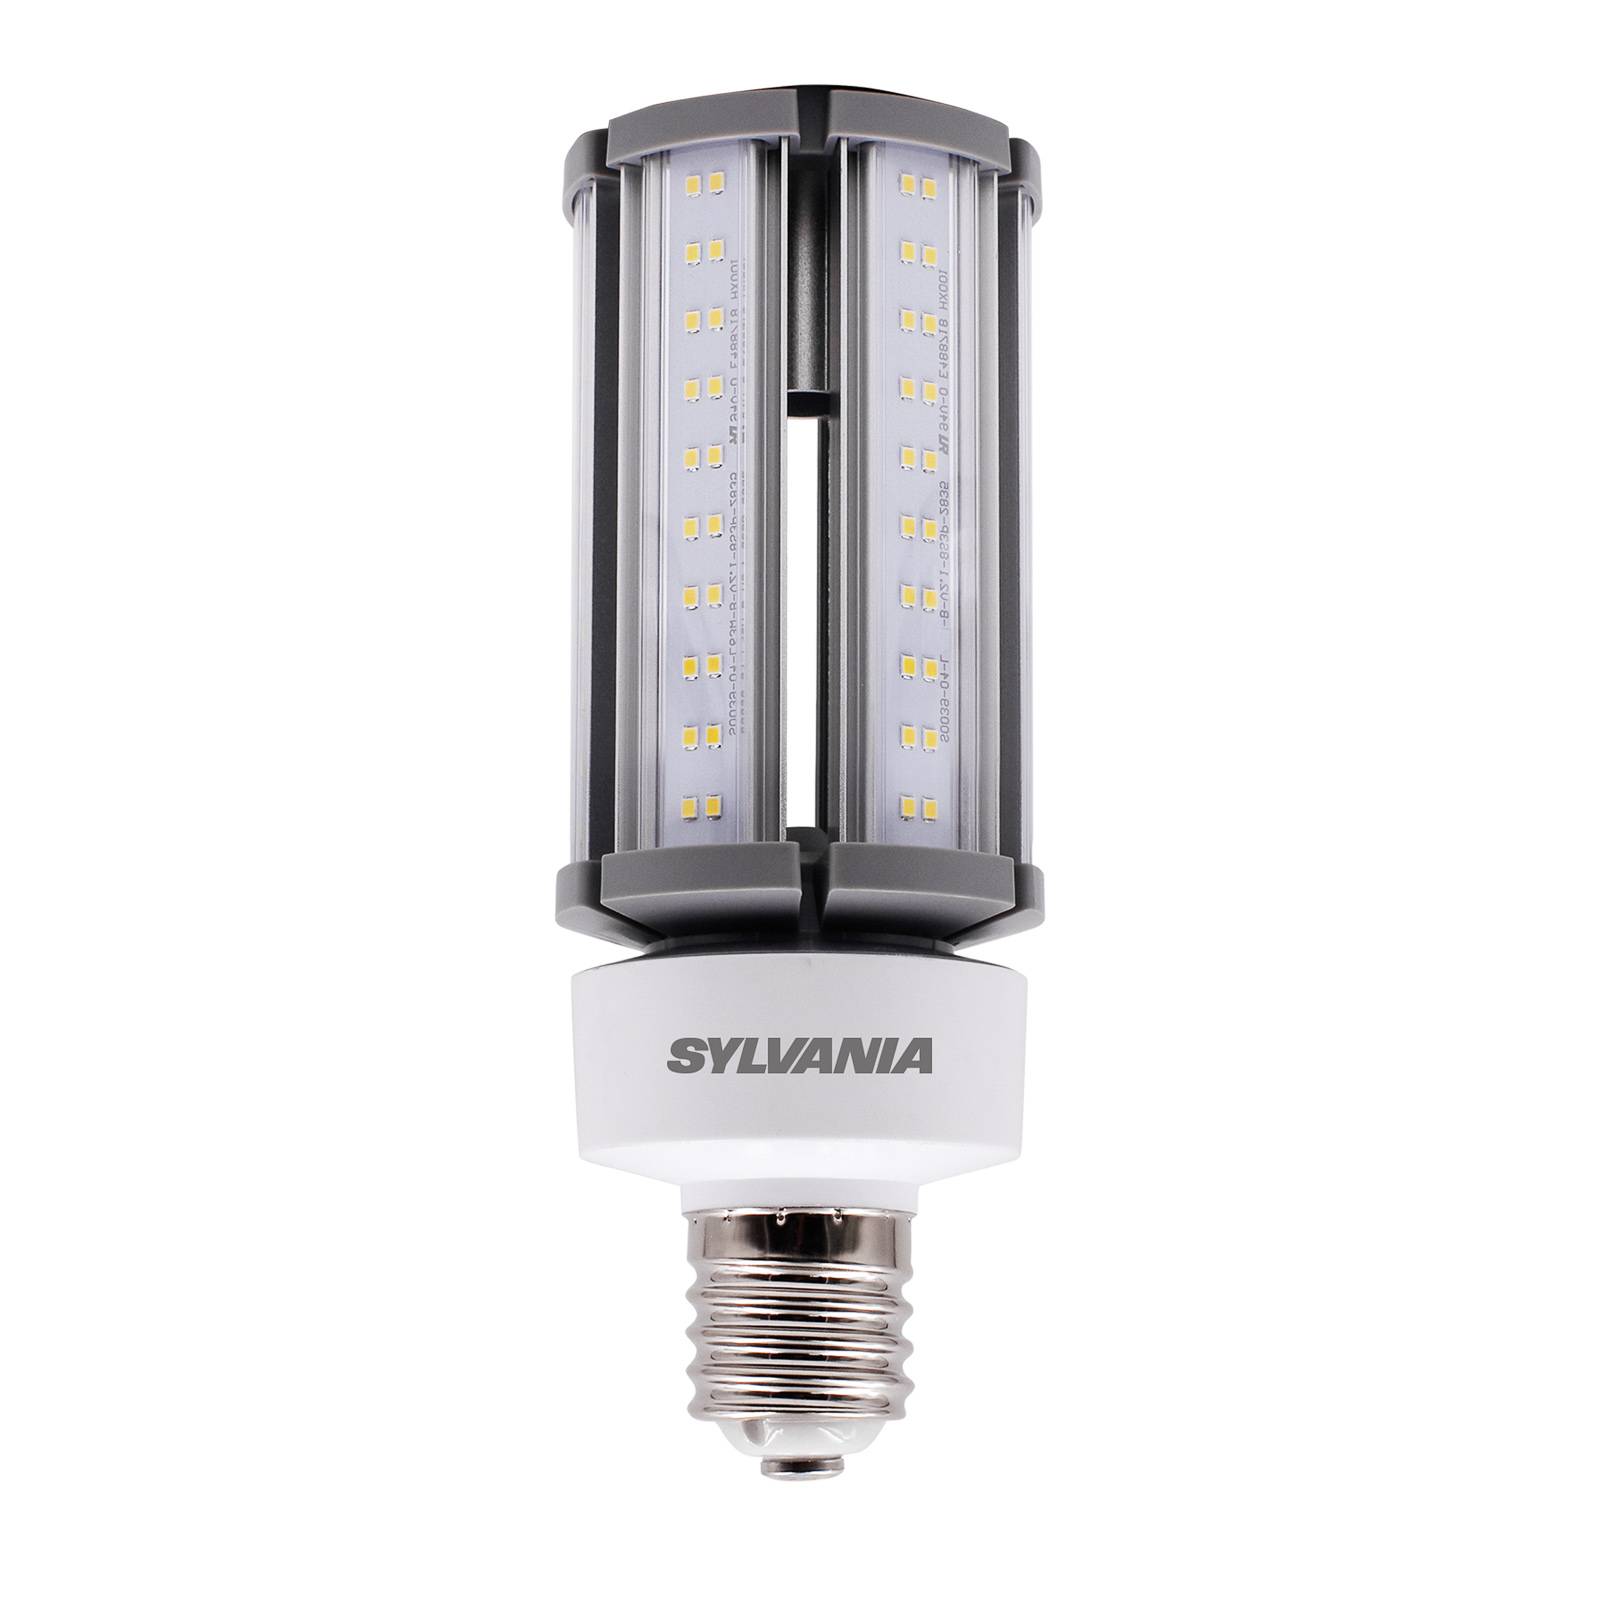 vermijden fragment Correspondentie Sylvania LED lamp E40, 54W, 4.000 K, 6.800 lm | Lampen24.be